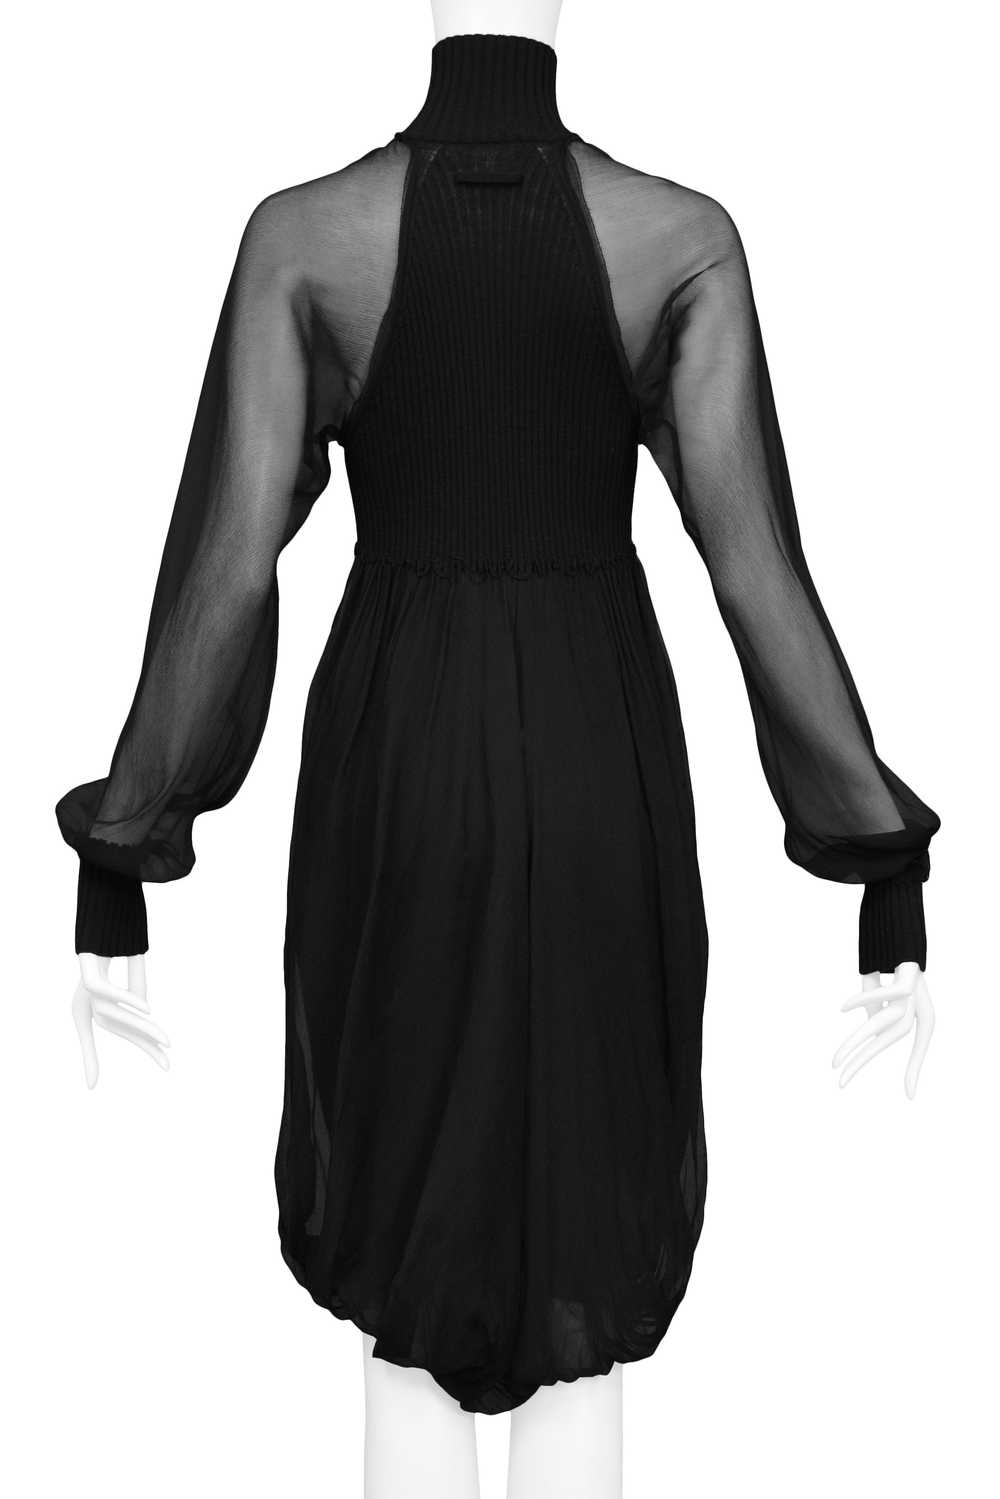 GAULTIER BLACK KNIT ILLUSION DRESS WITH CHIFFON O… - image 6